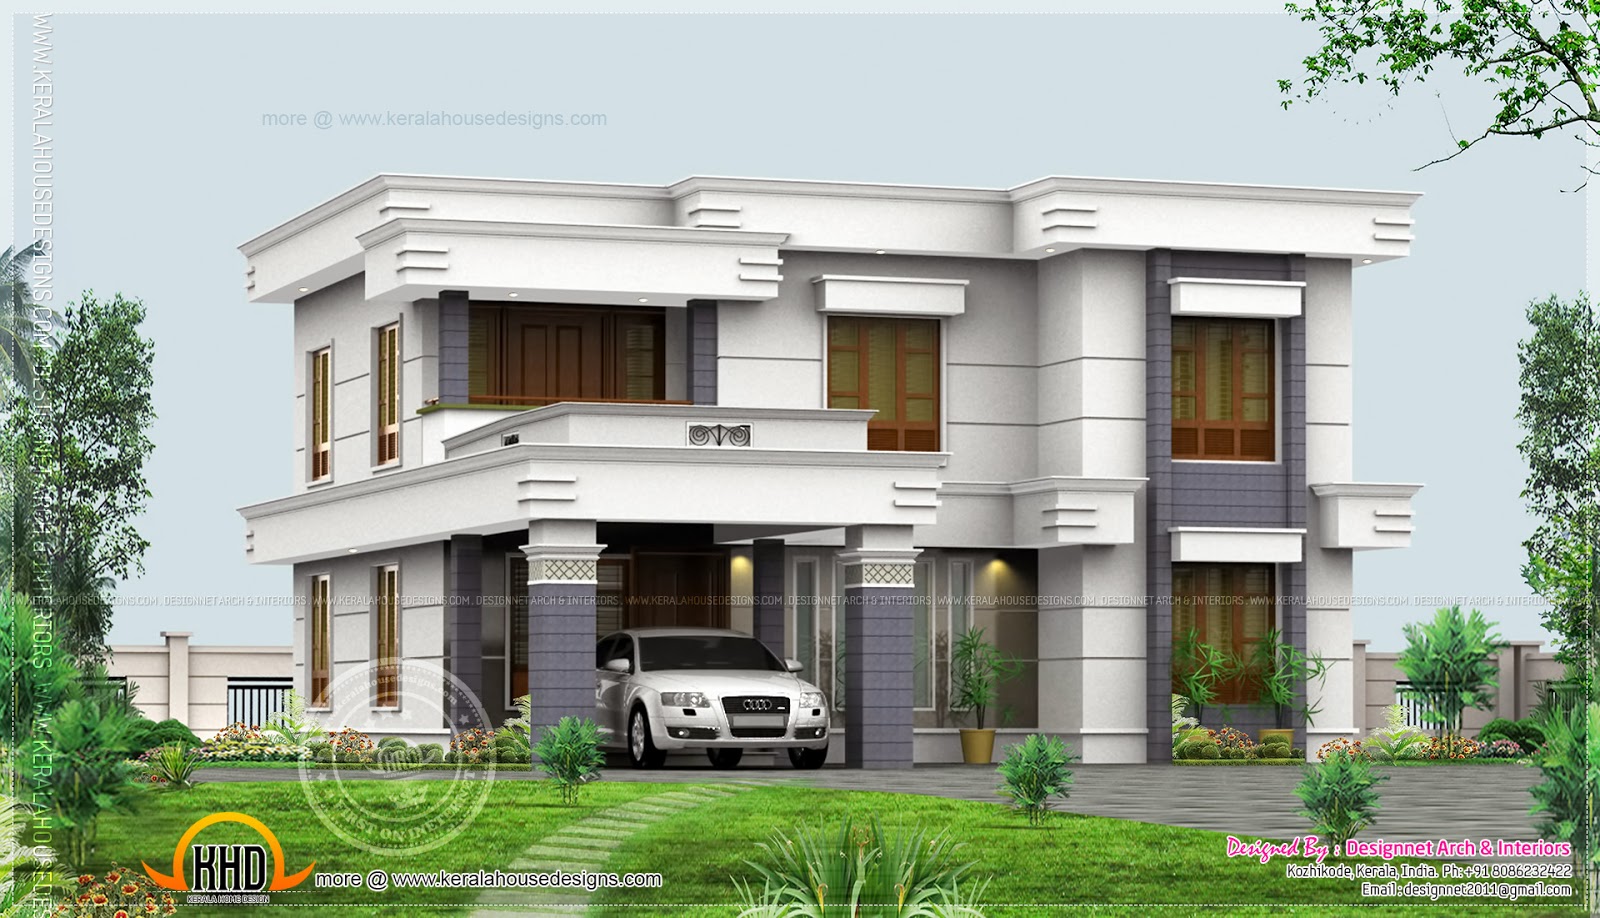  4  bedroom  Flat  Roof  design in 2500 sq ft Home  Kerala Plans 